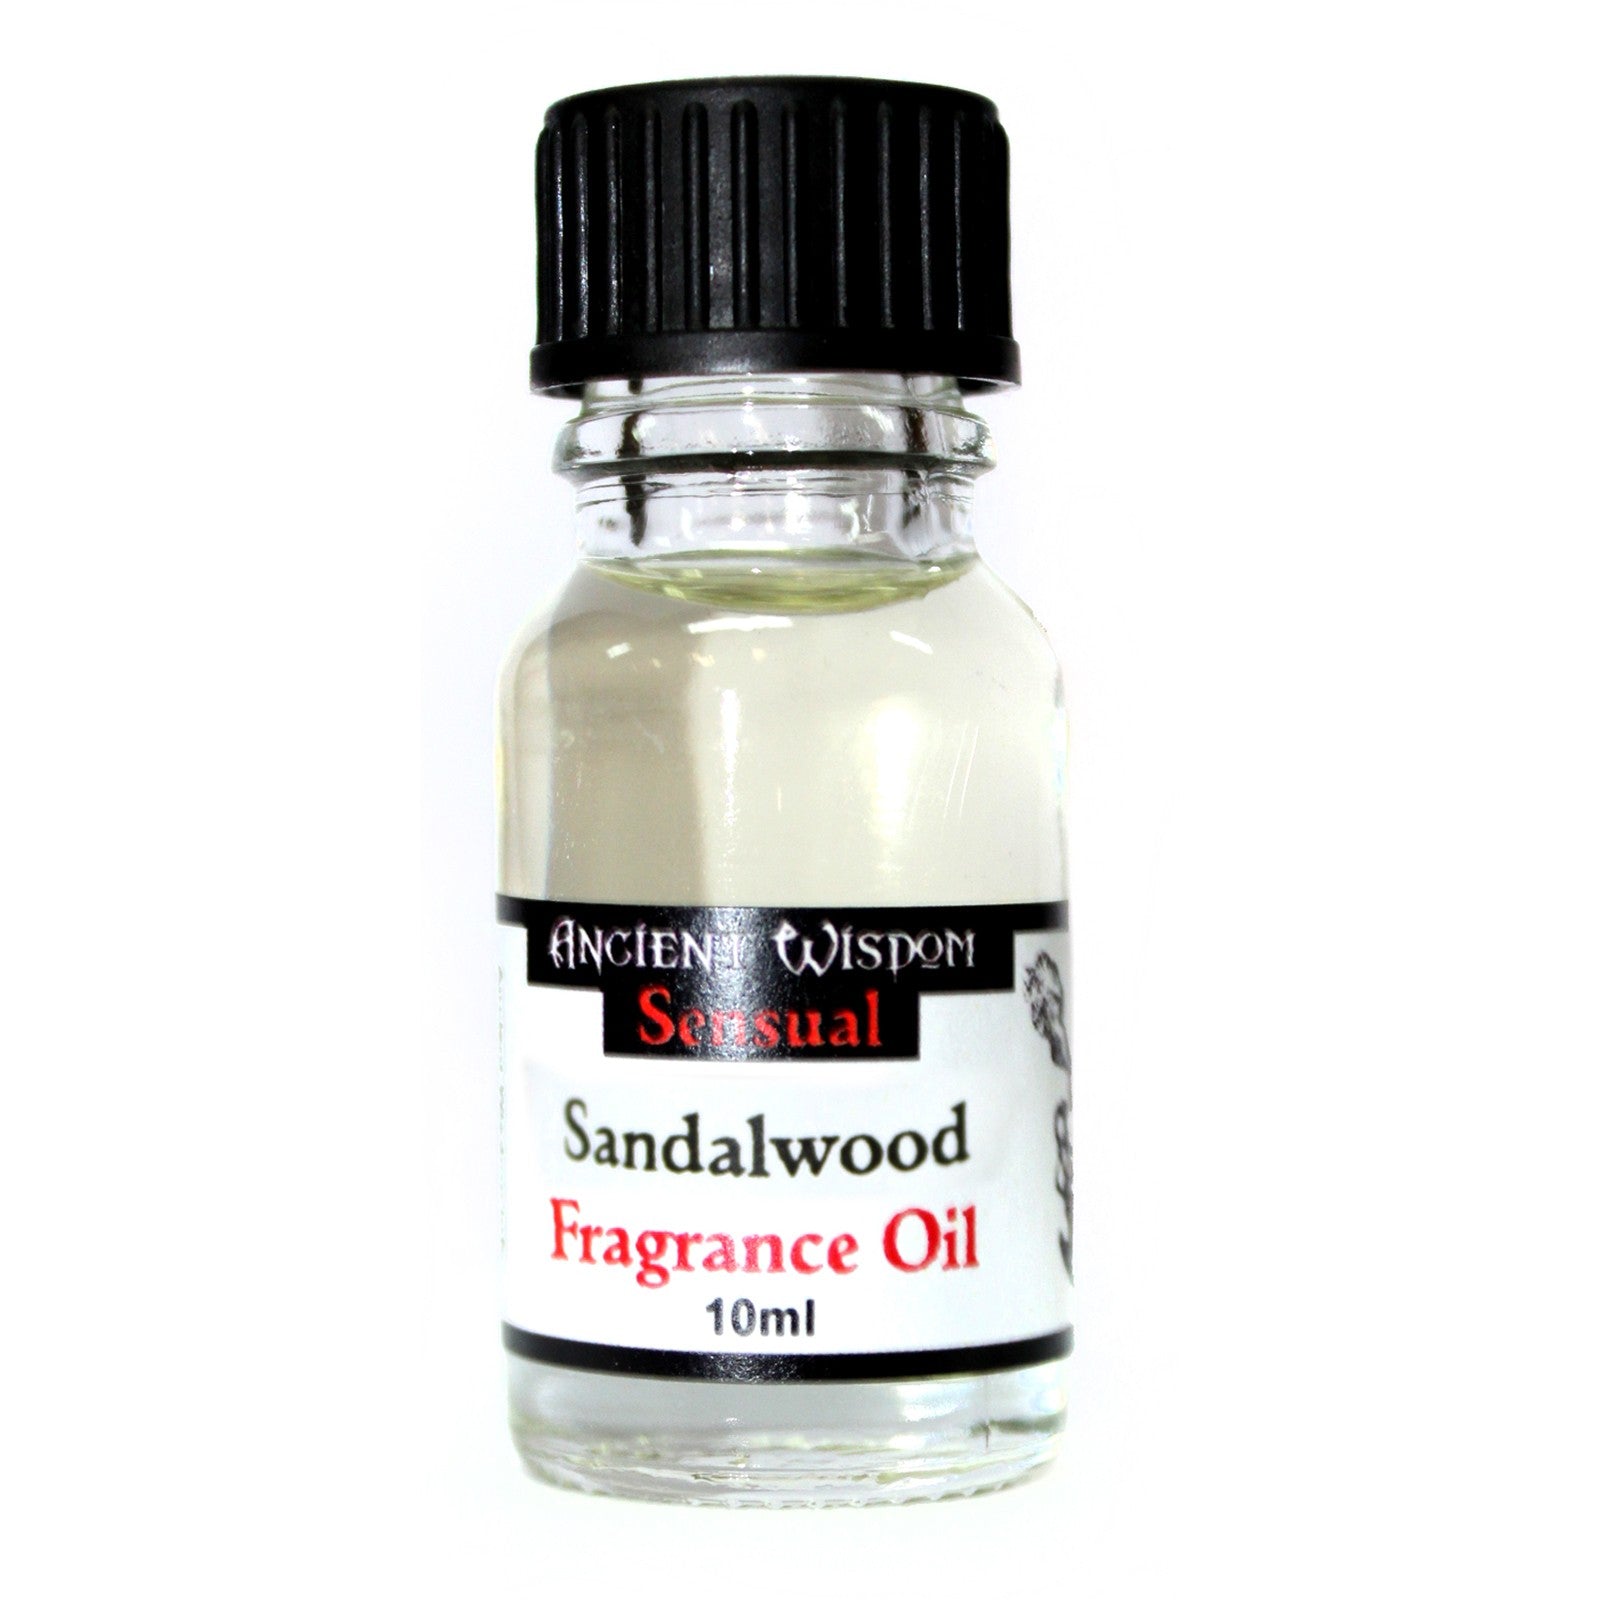 View 10ml Sandalwood Fragrance Oil information